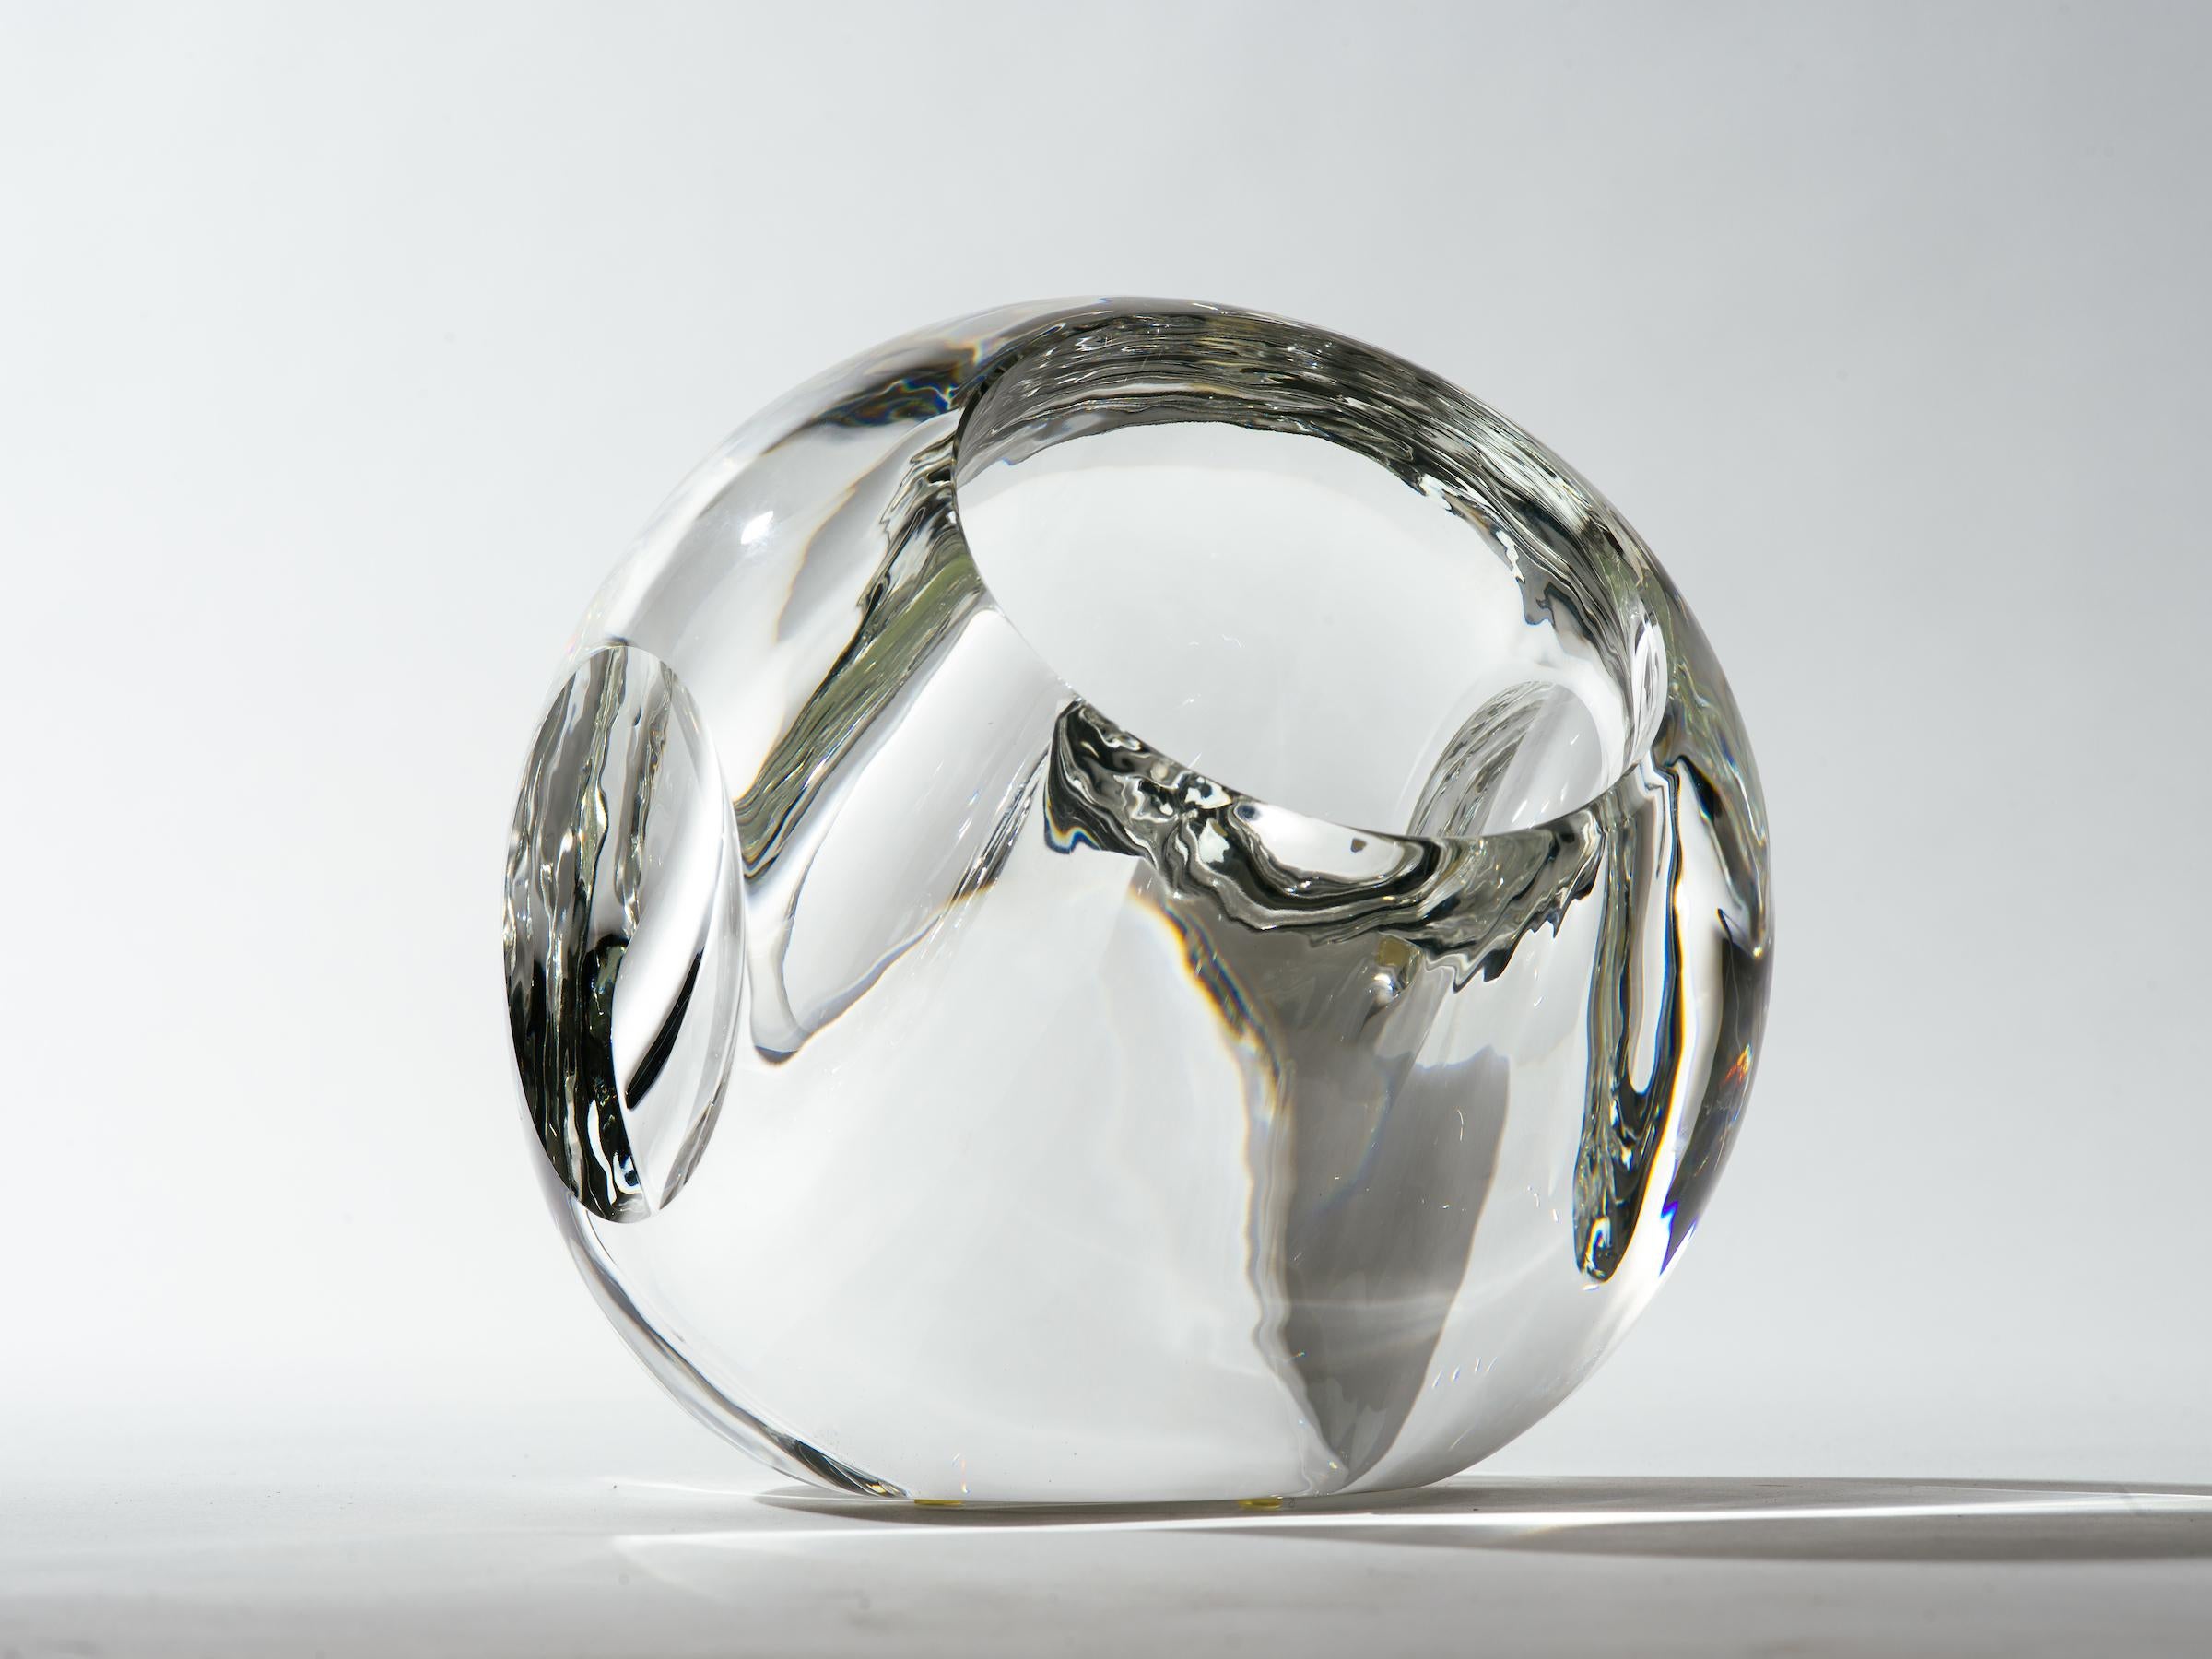 Postmodern Op Art engraved convex glass sphere sculpture vase by Veritas, circa 2017. Acid engraved signature on bottom.